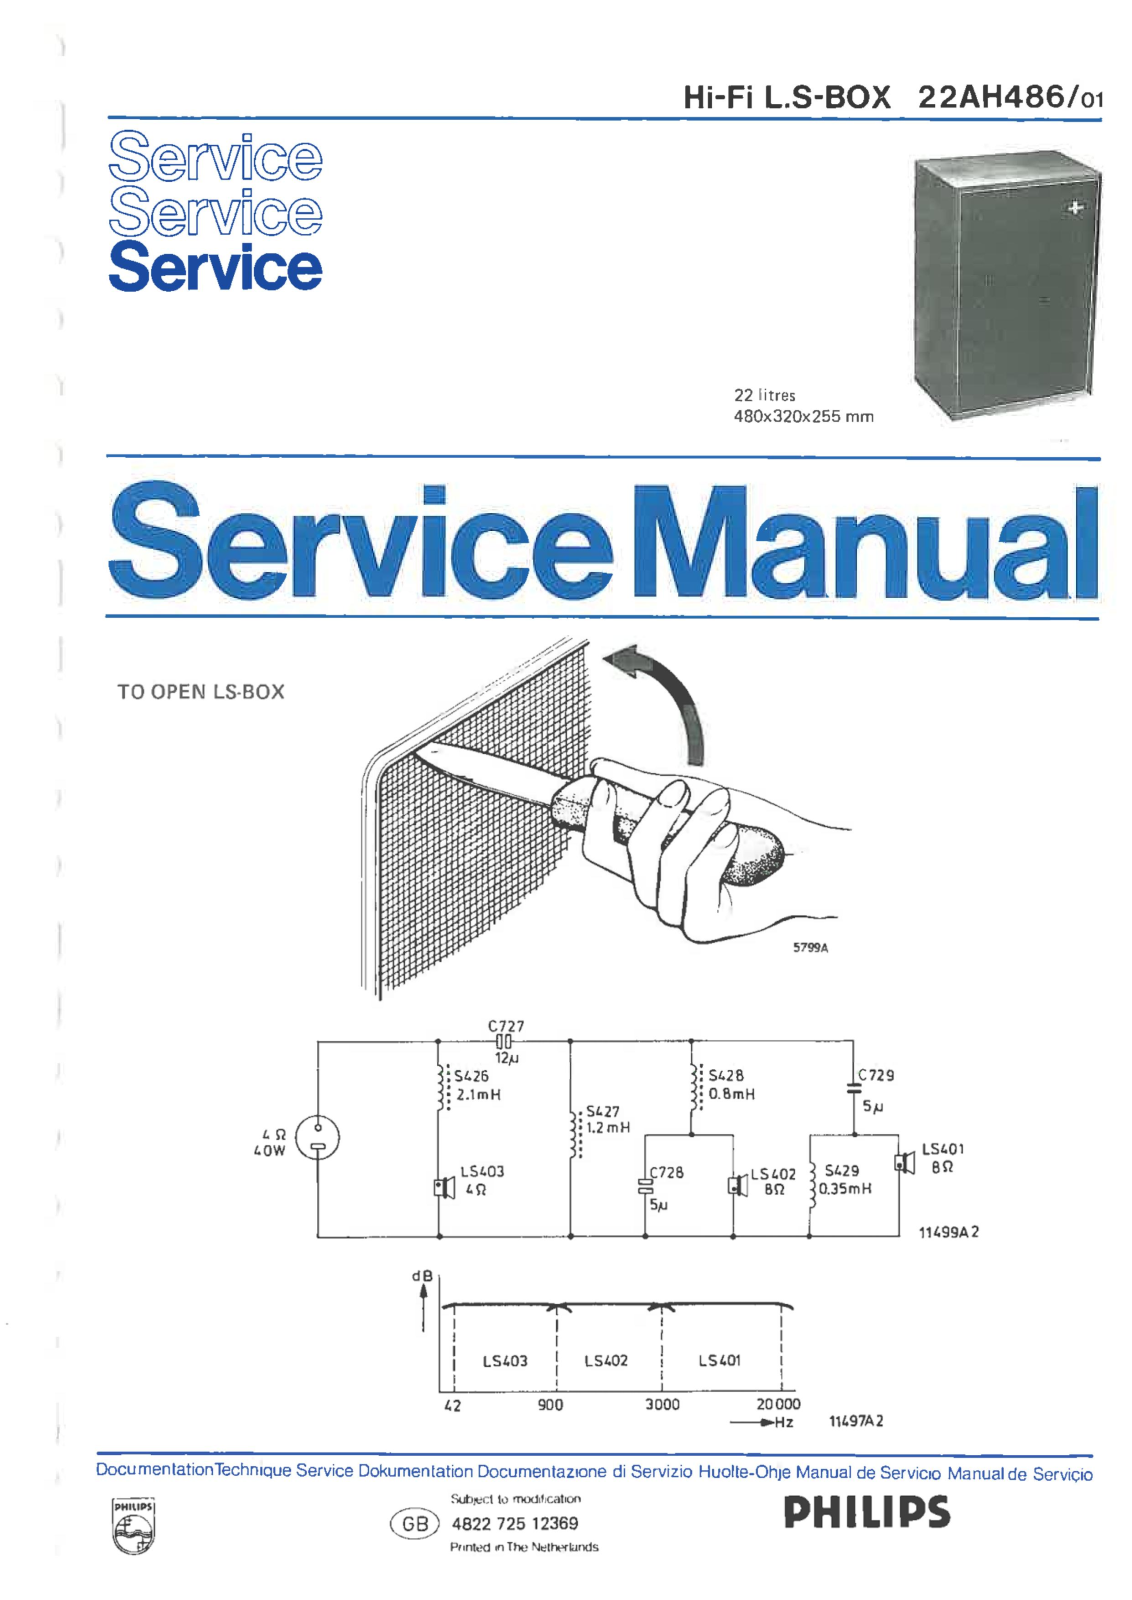 Philips 22-AH-486 Service Manual